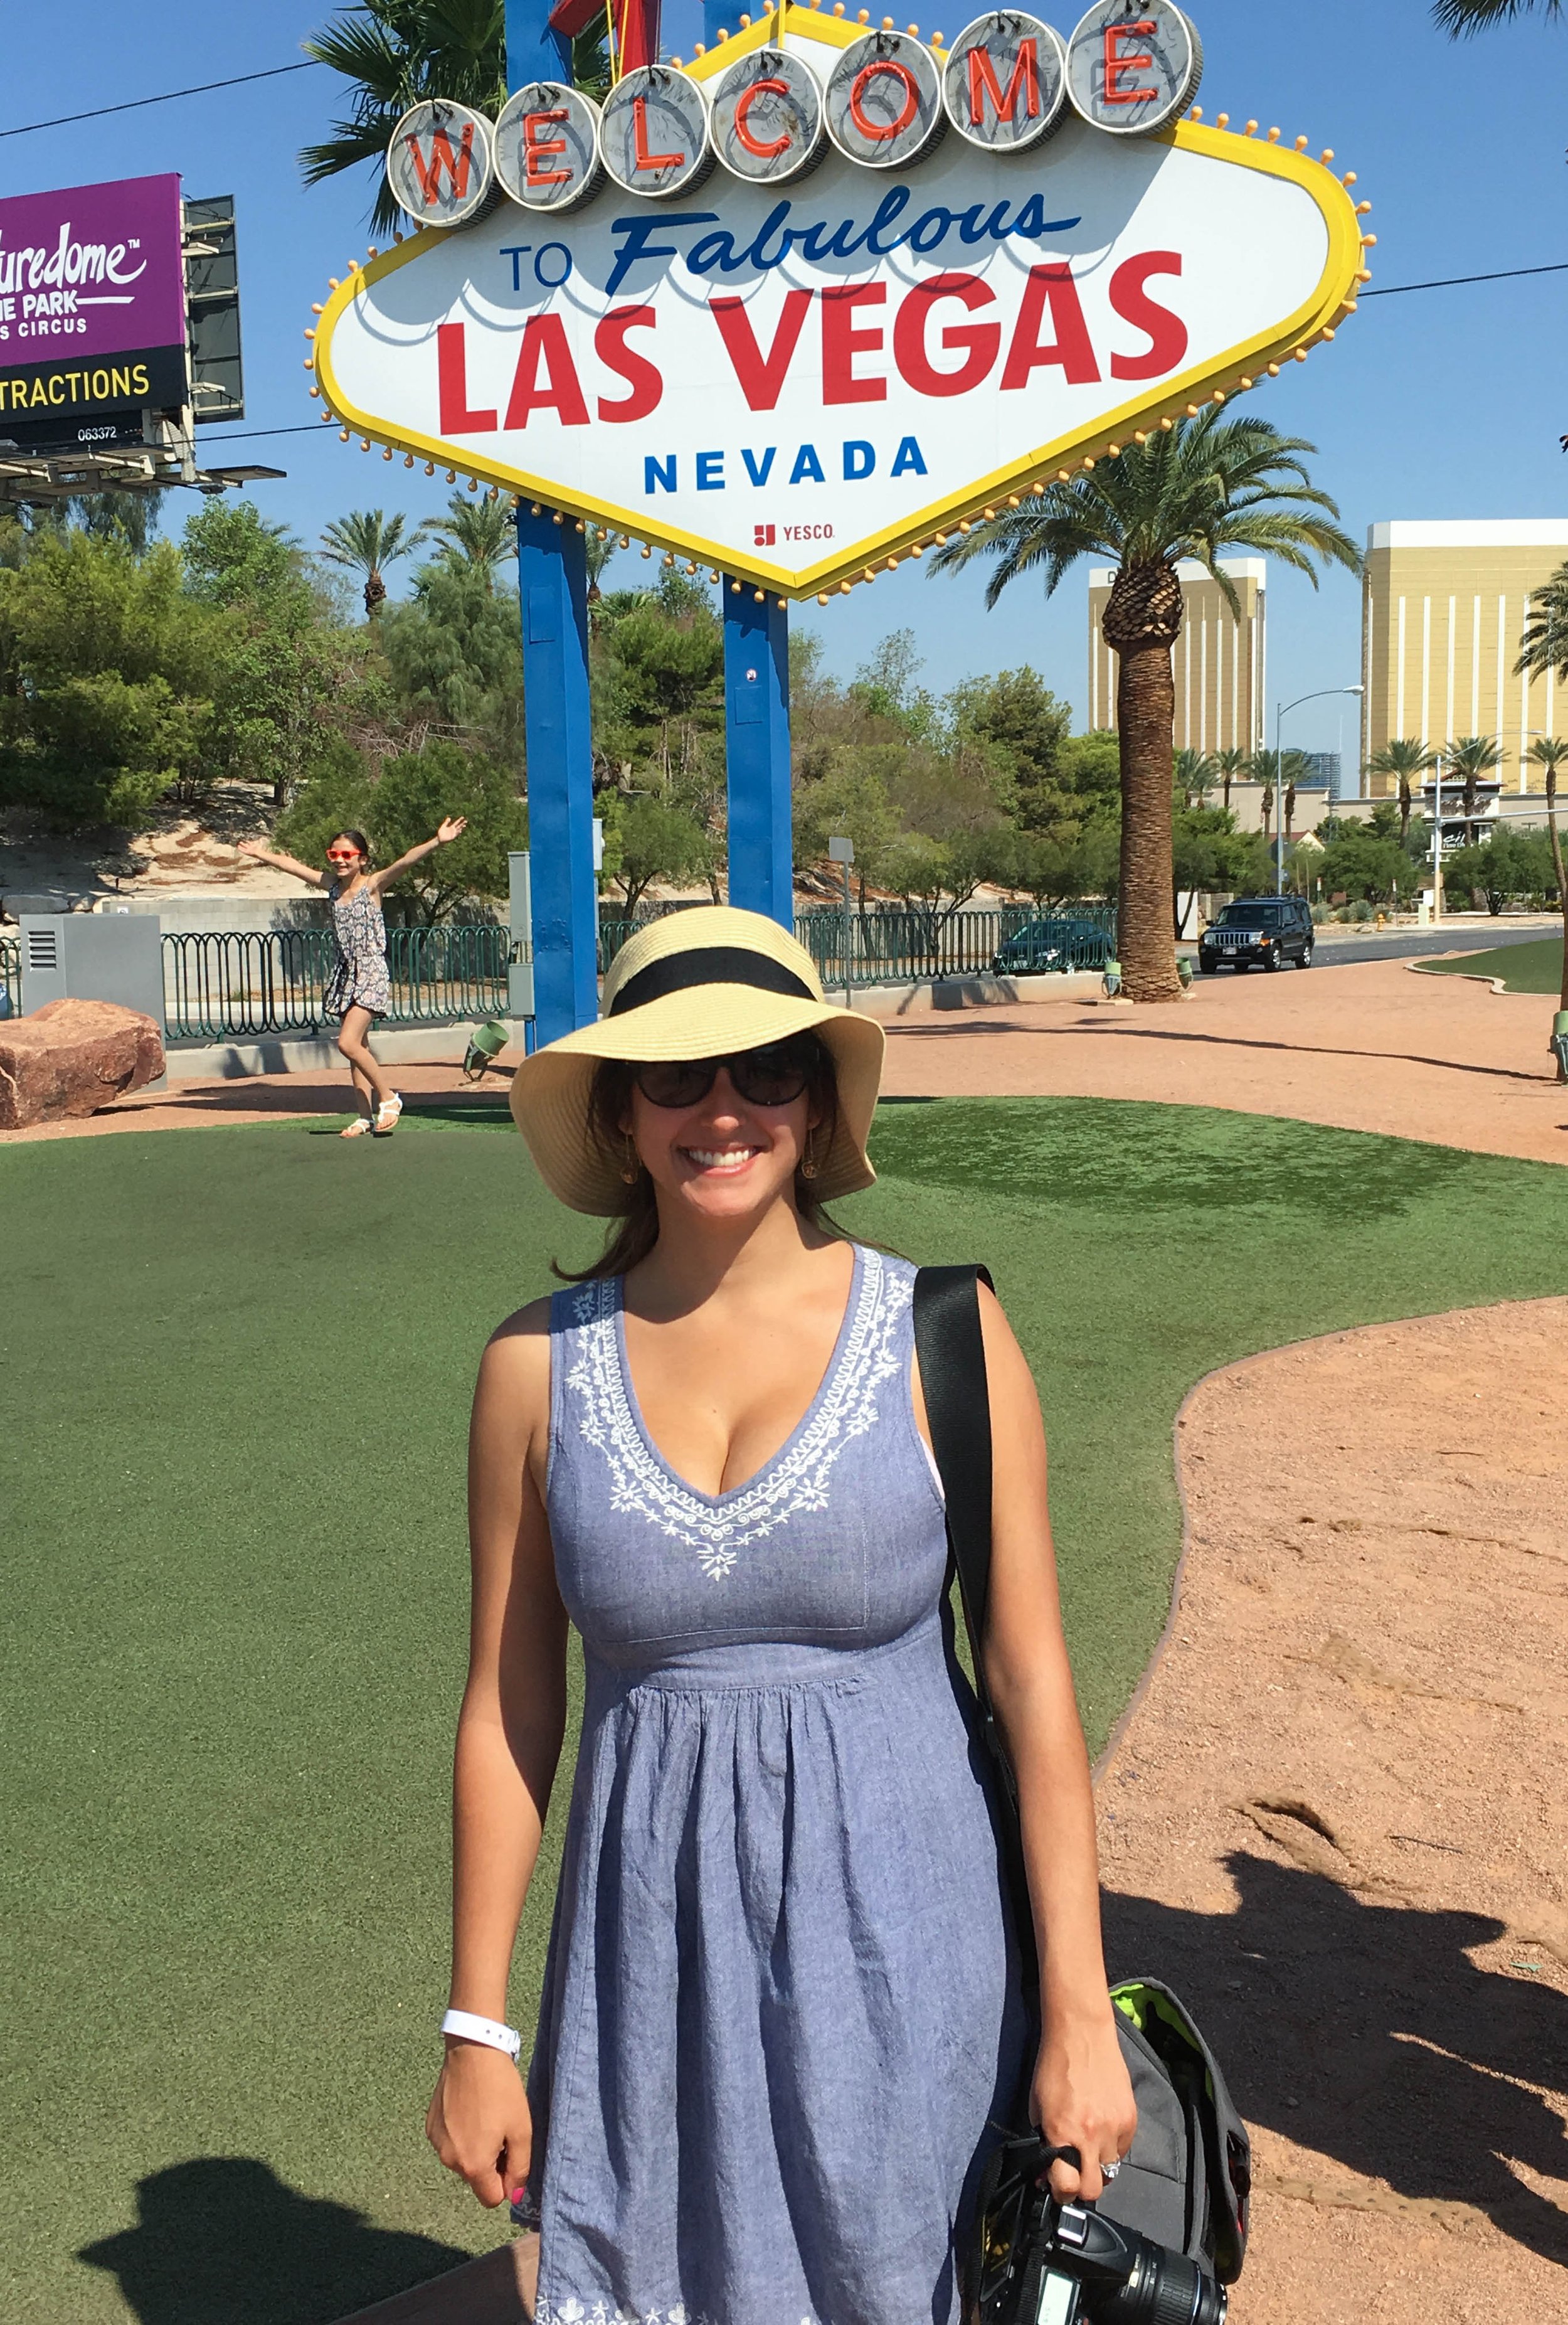 Bachelorette party ideas - do a stop at the Las Vegas sign